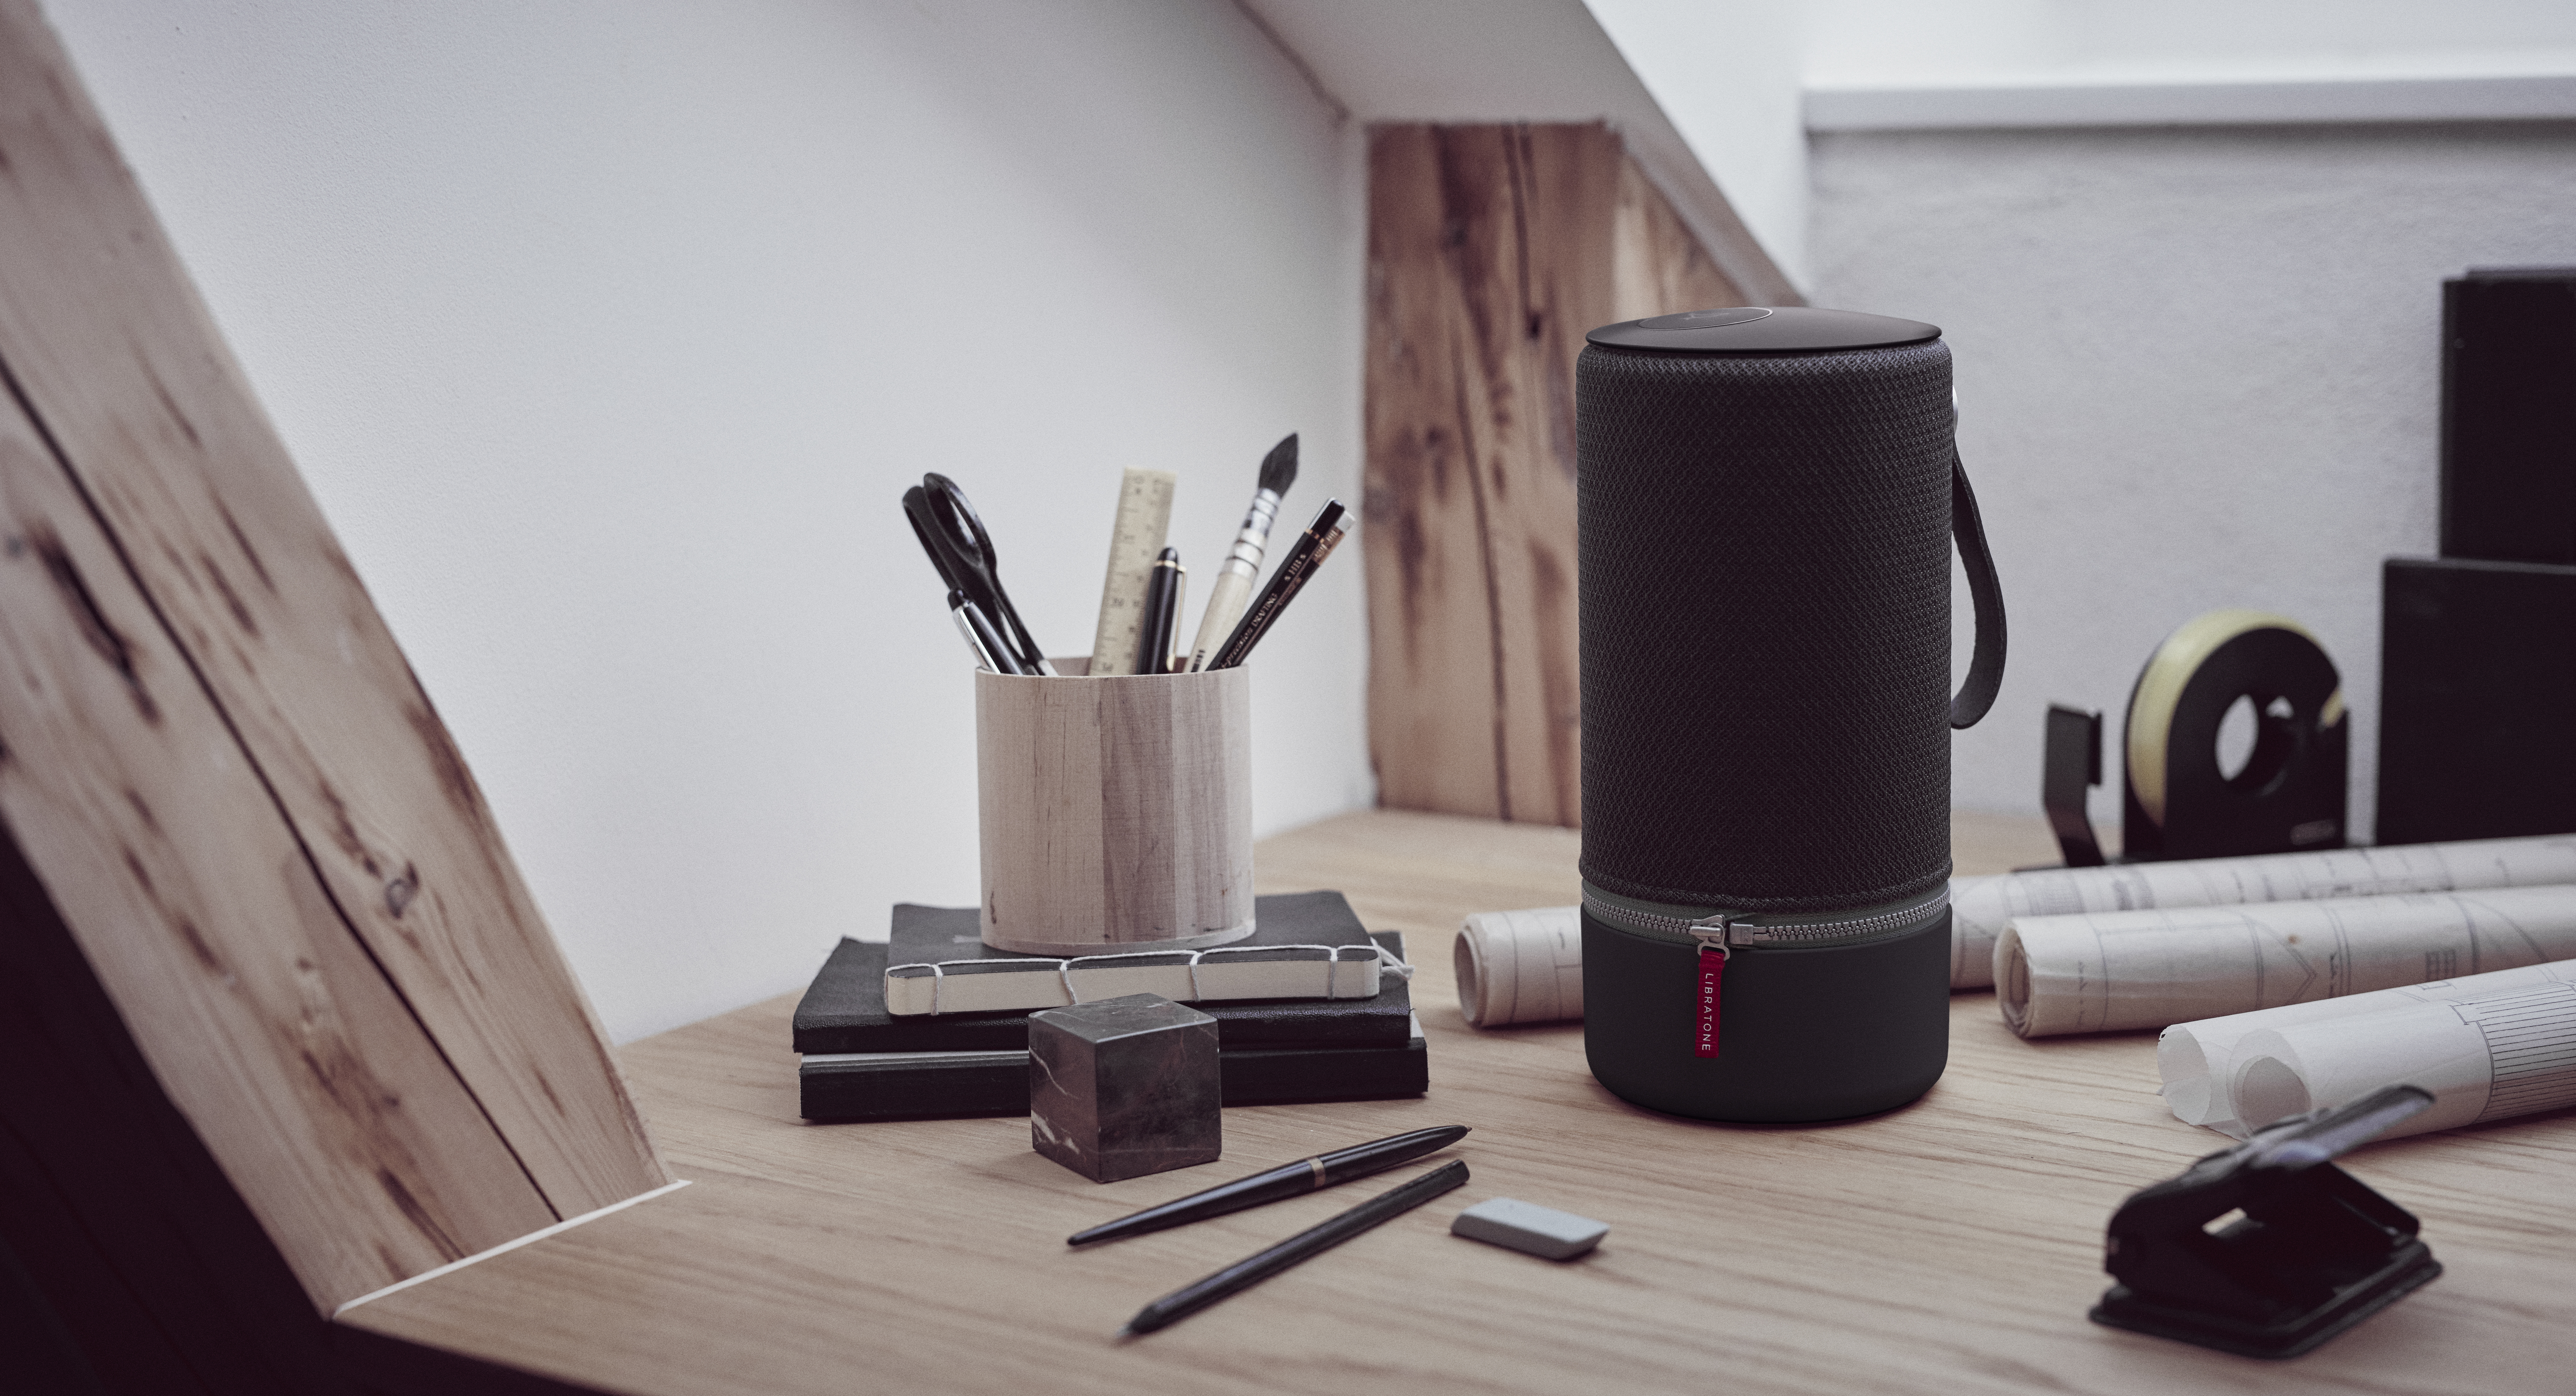 Libratone update will add Amazon Alexa voice control to its speakers